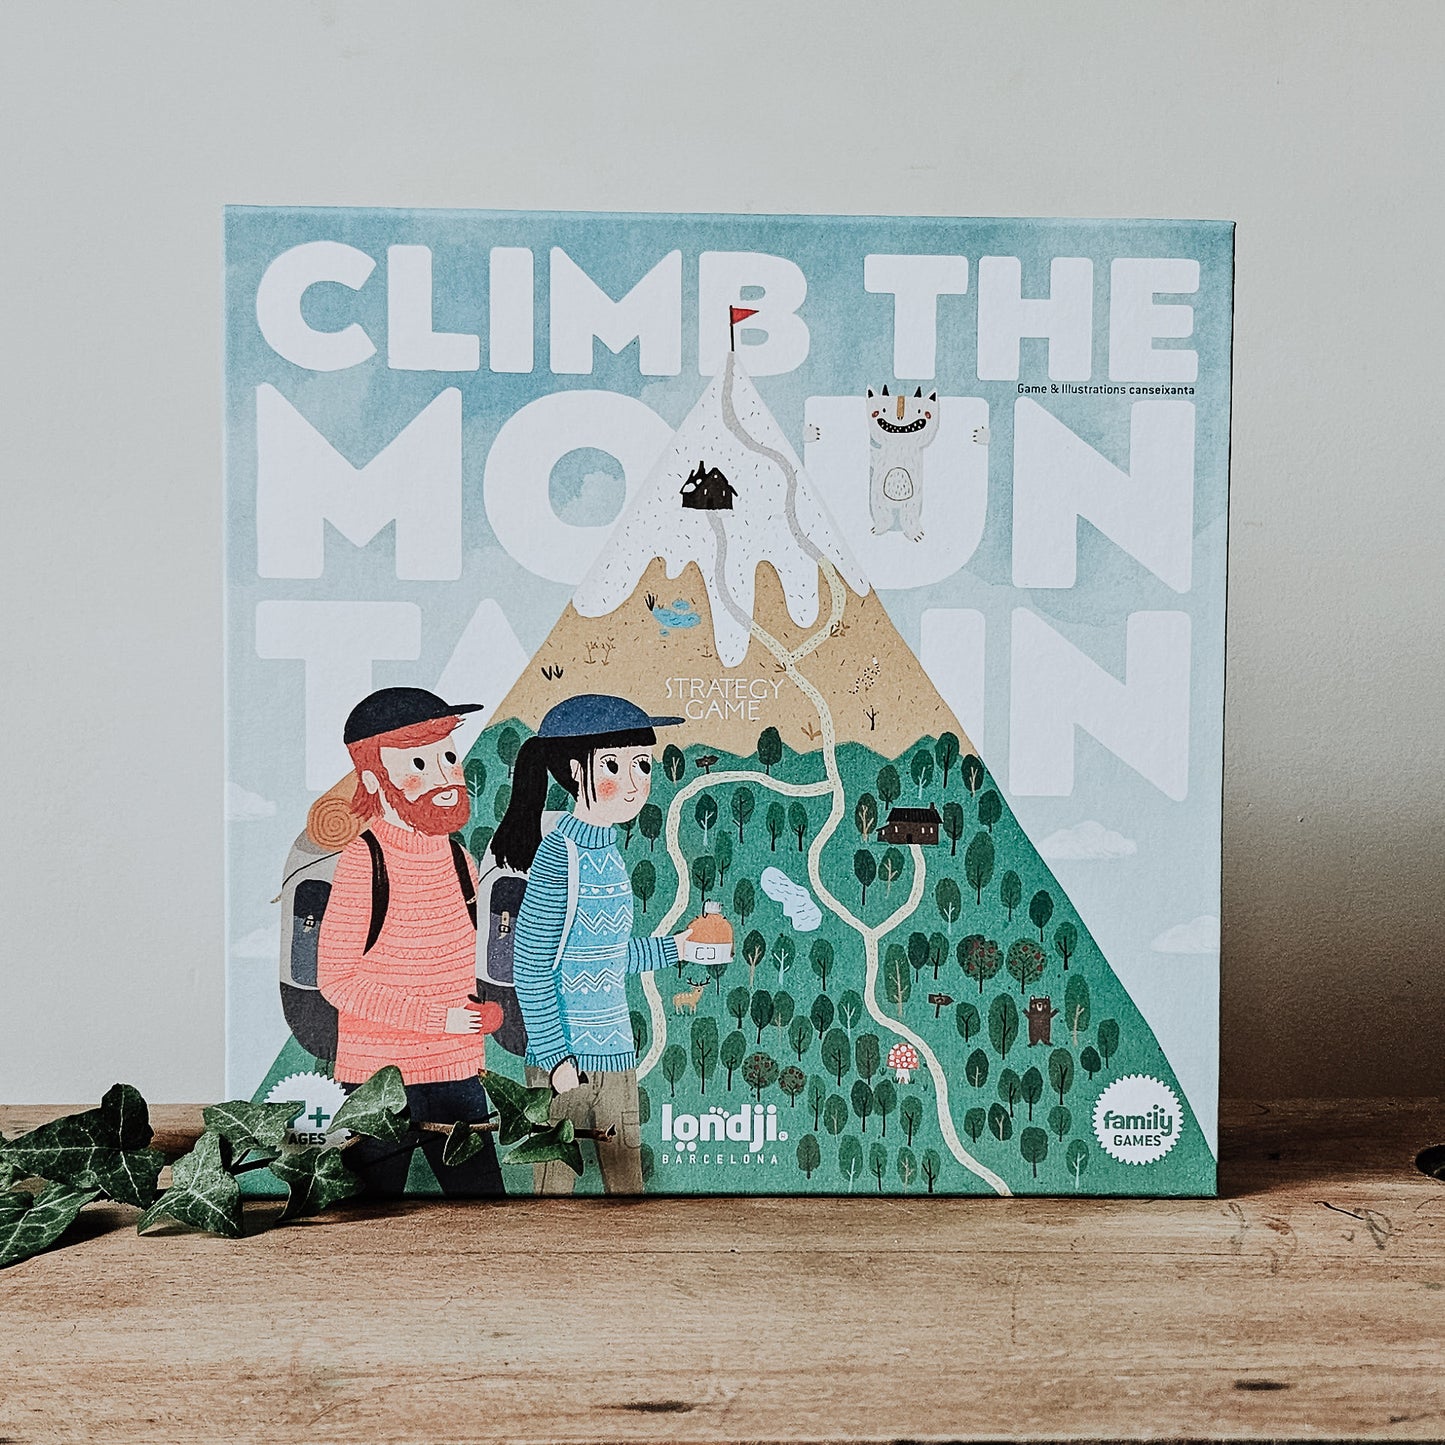 Jeu de stratégie - Climb the mountain